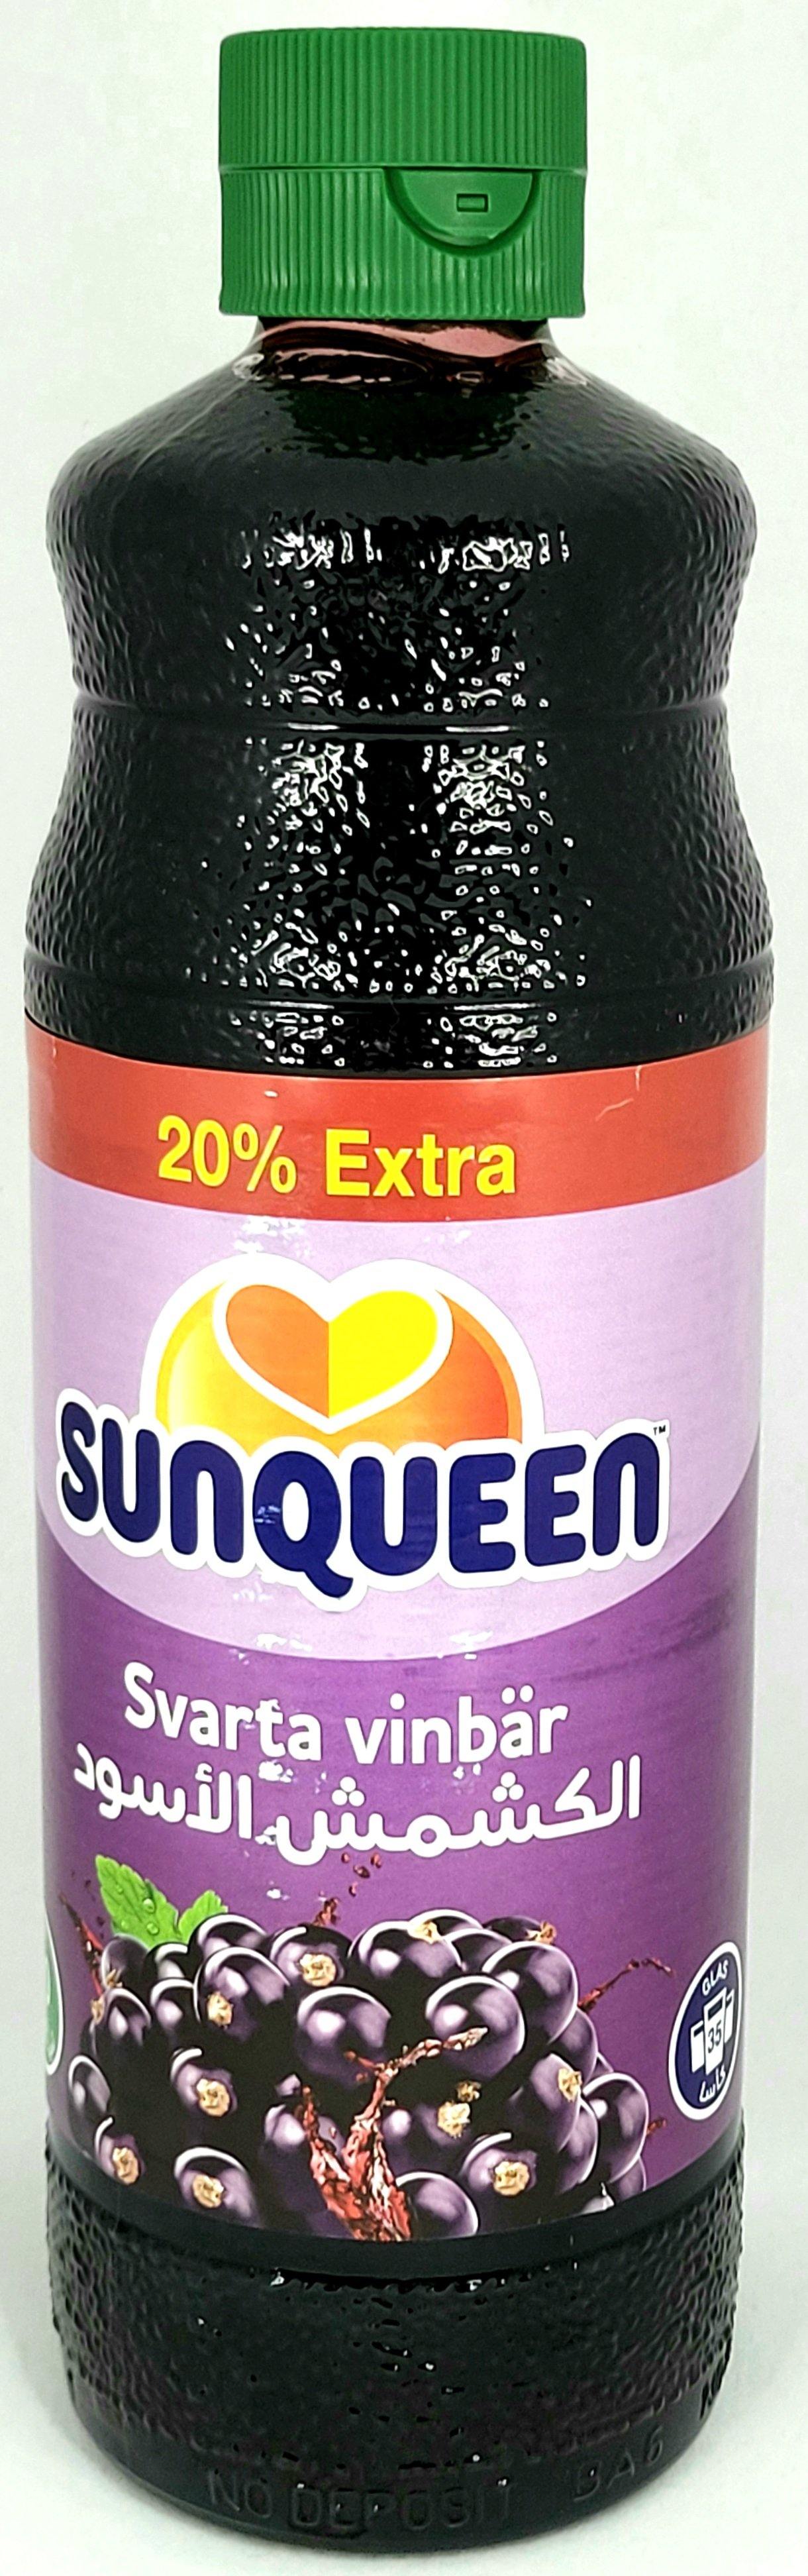 SunQueen Black Currant - Arabian Shopping Zone